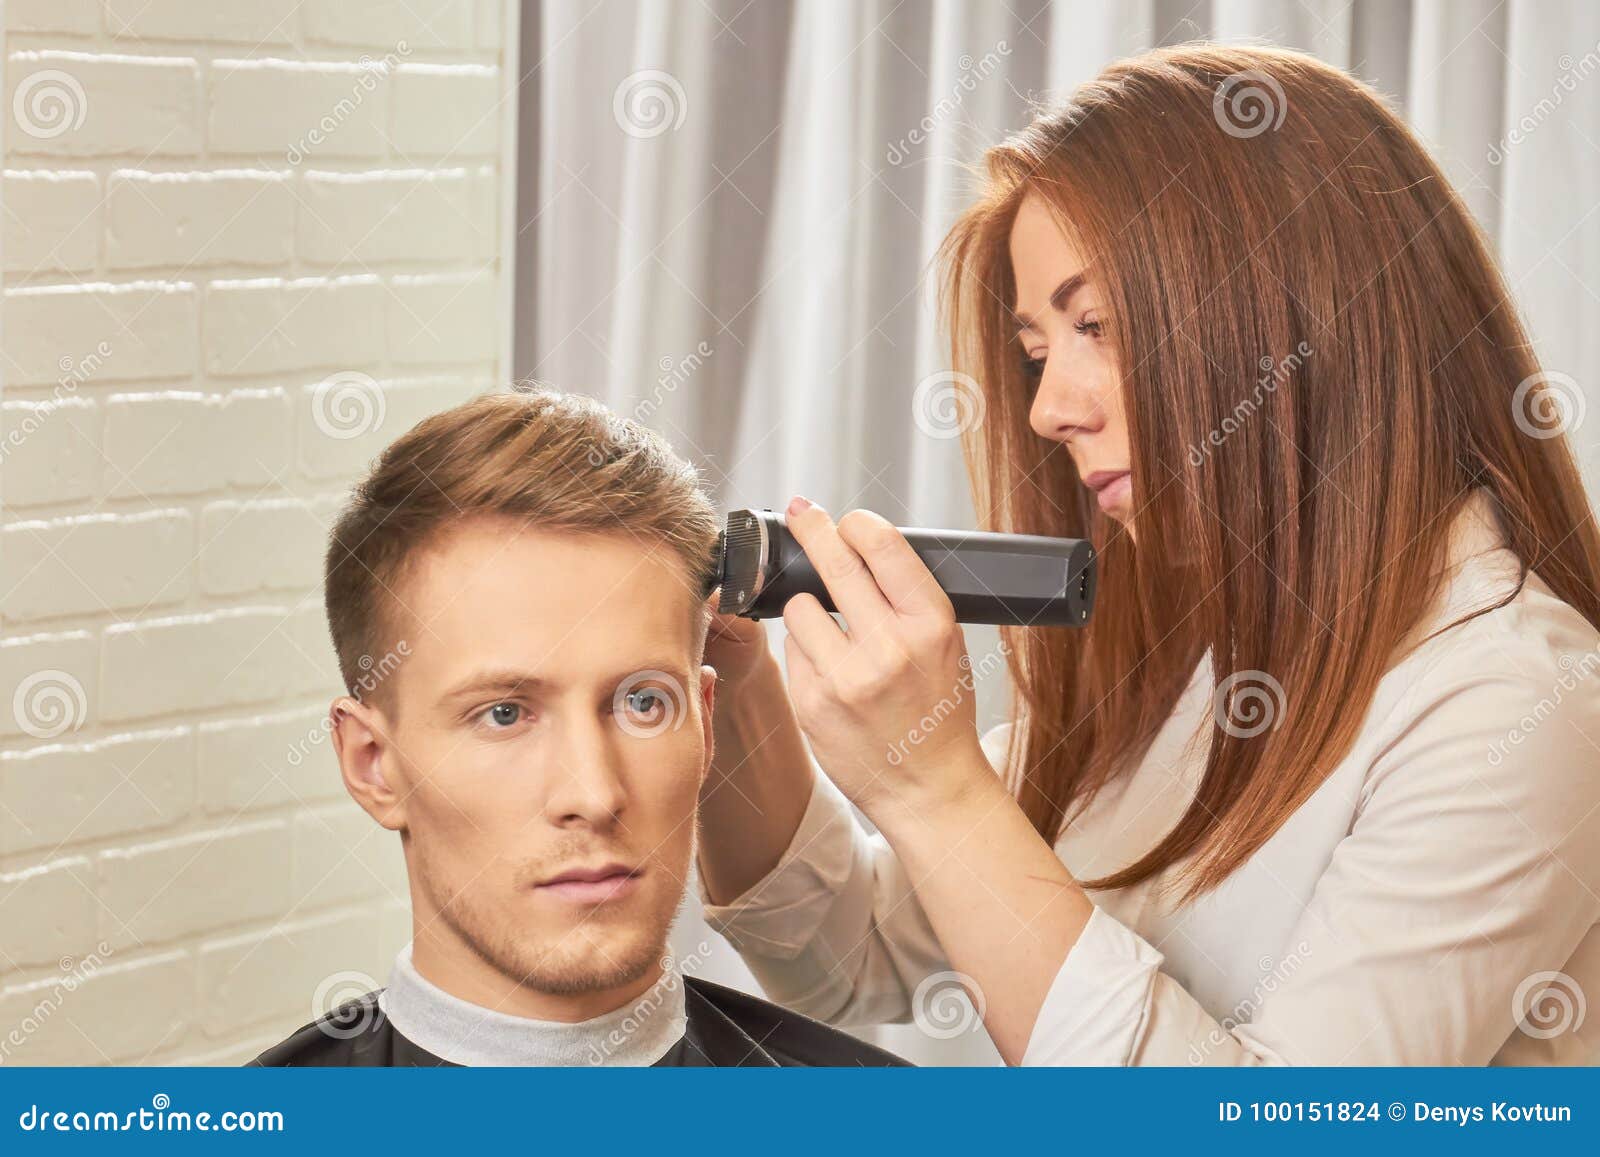 Man getting a haircut. stock photo. Image of hairclipper - 100151824